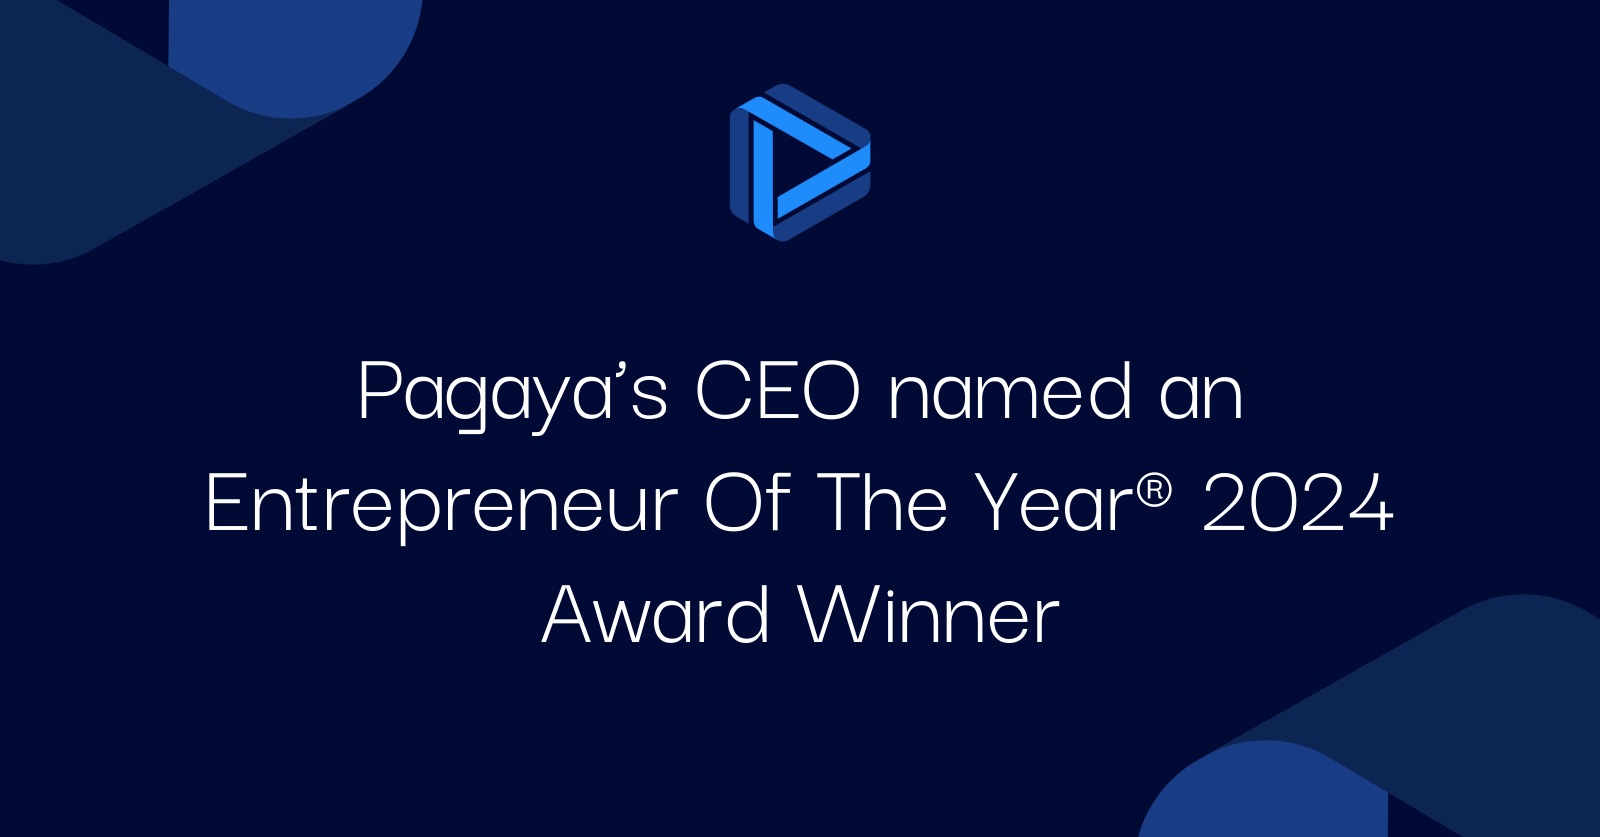 Pagaya’s CEO named an Entrepreneur Of The Year® 2024 Award Winner